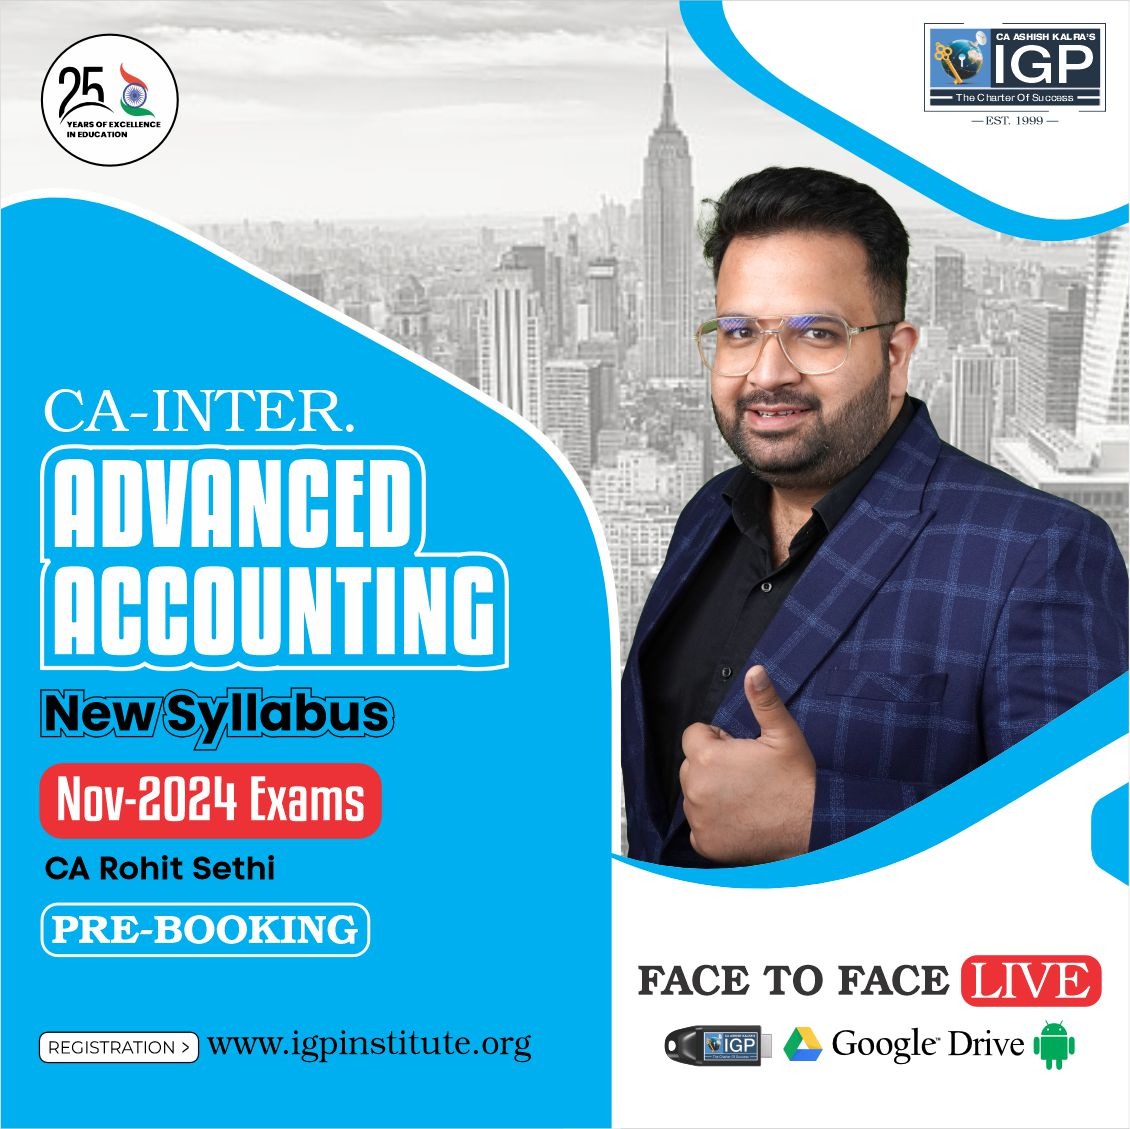 CA Inter Advanced Accounting New Syllabus Nov 24 Exam Pre Booking-CA-INTER-Advanced Accounting- CA Rohit Sethi